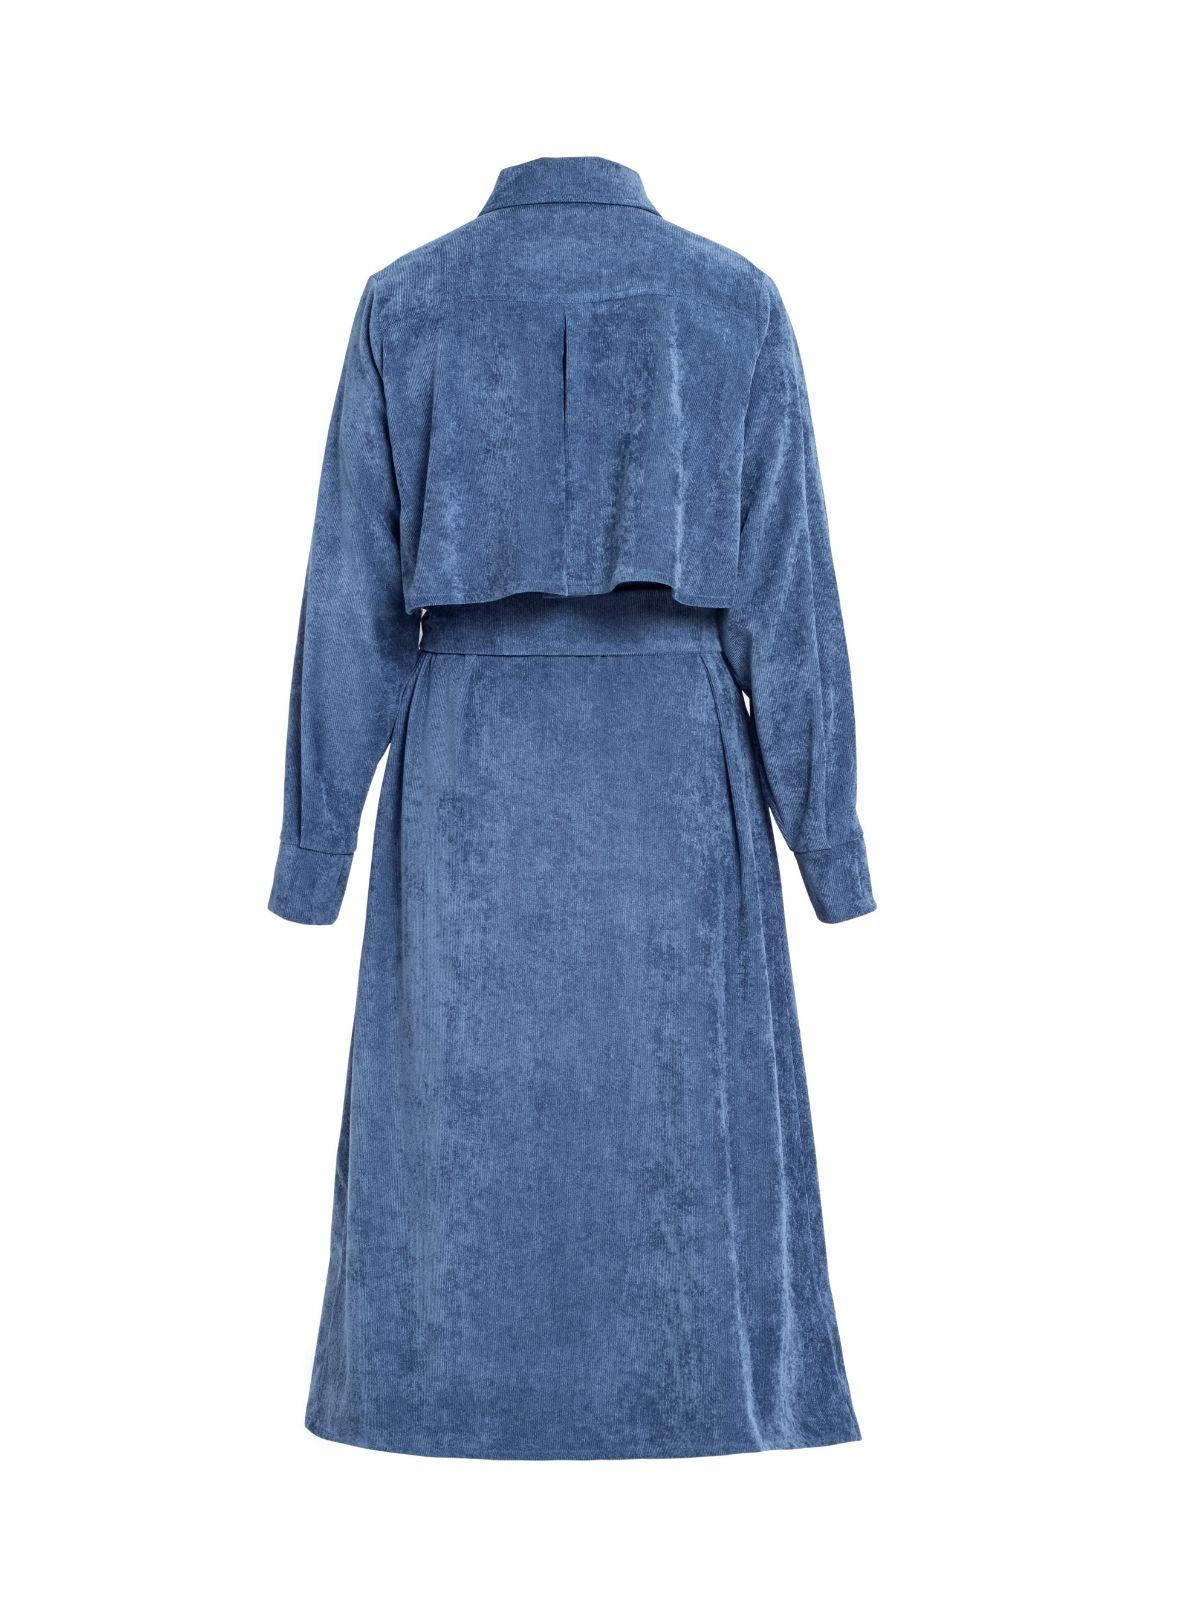 VELA coat dress - micro cord, blue